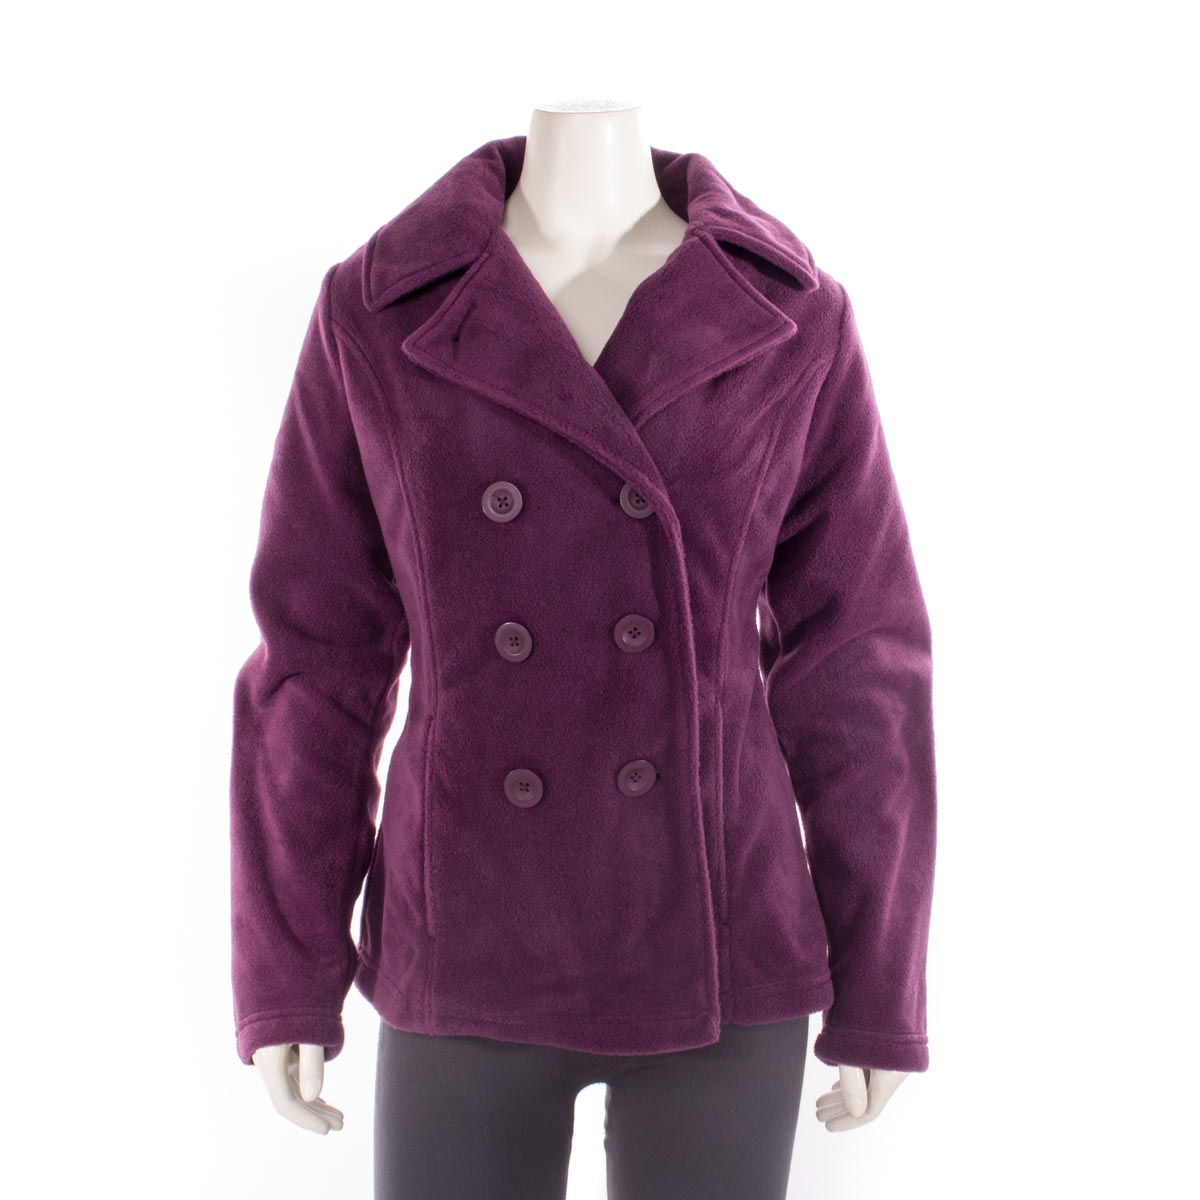 Columbia Women's Benton Springs Pea Coat Discontinued Pricing